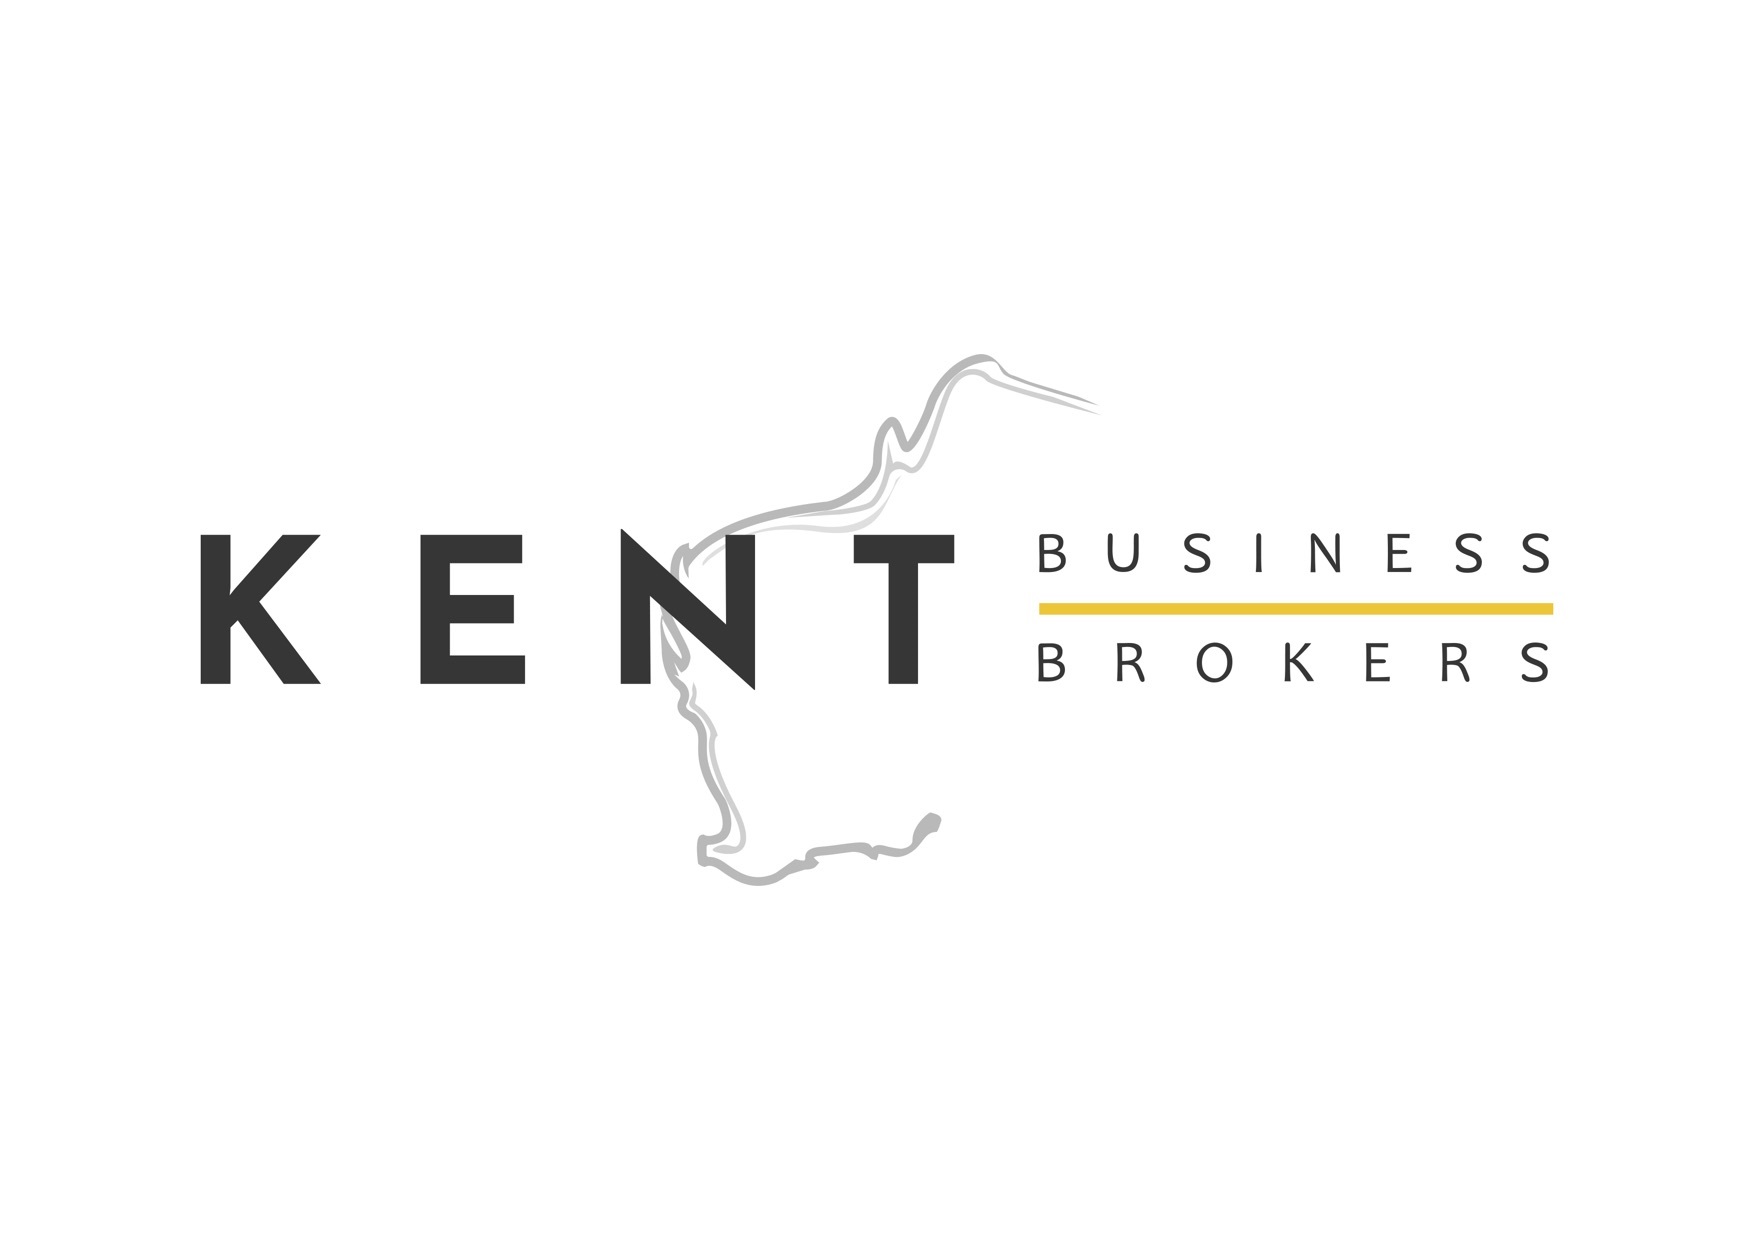 Kent Business Brokers image